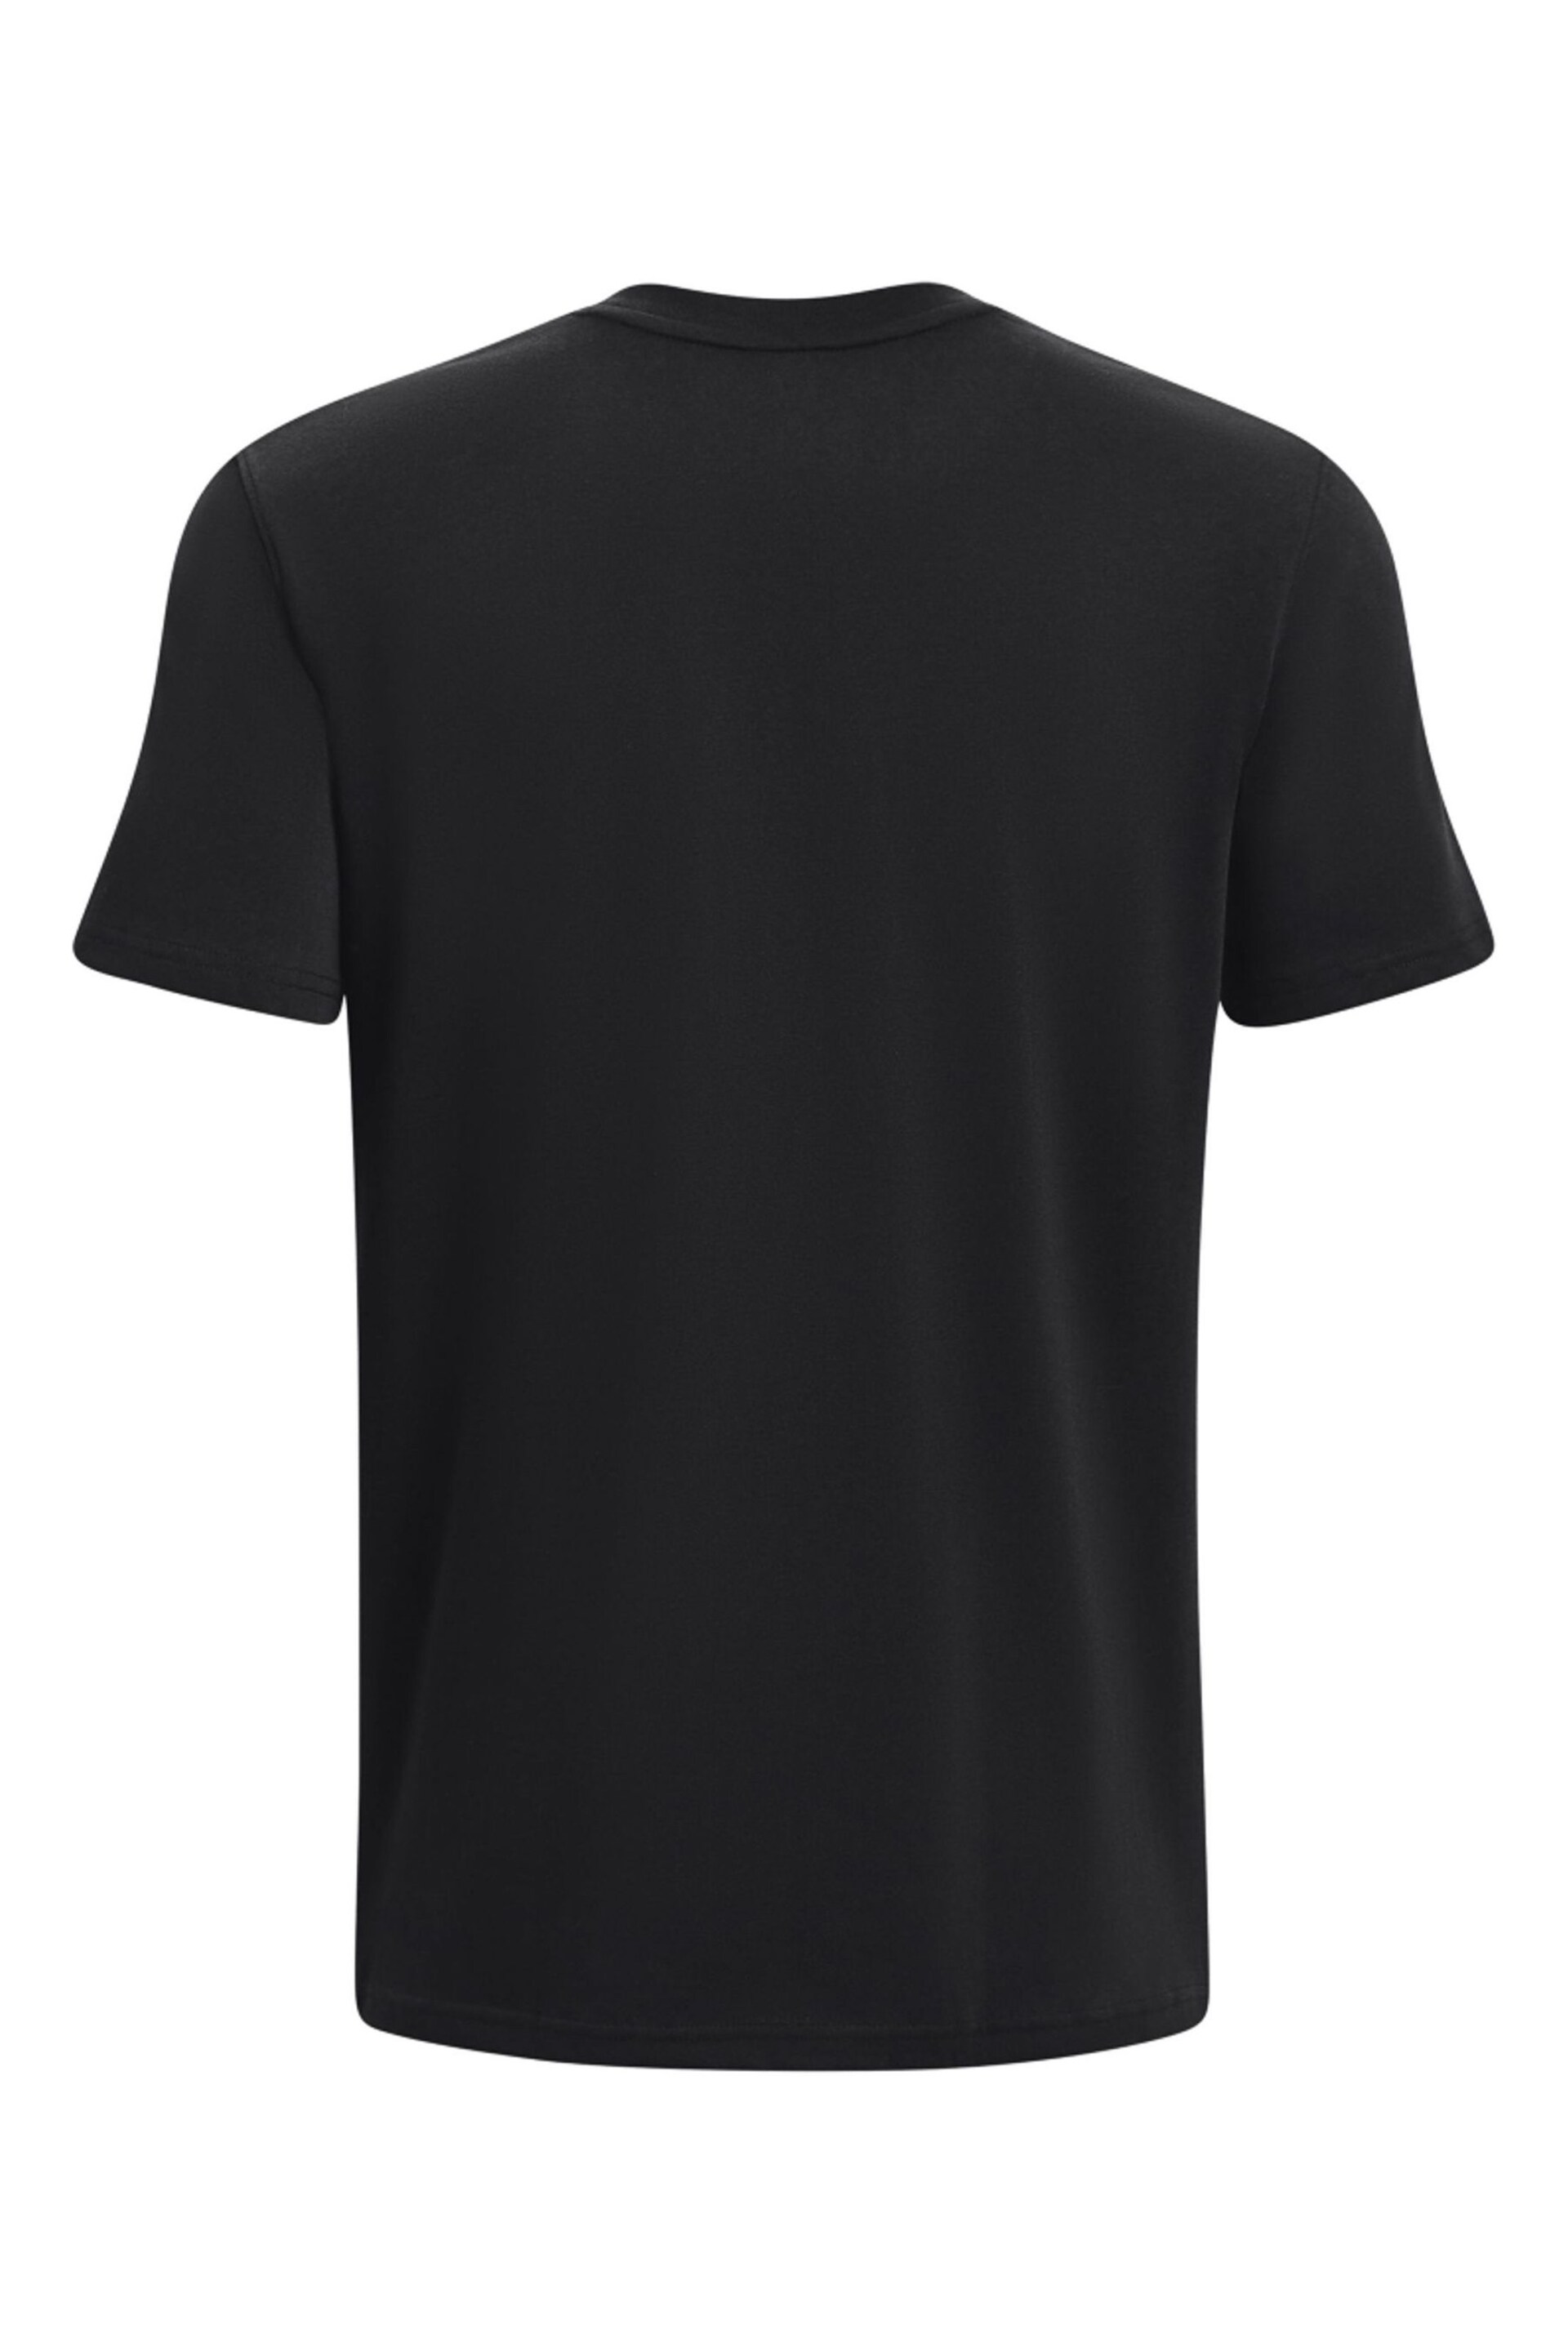 Under Armour Black Logo Heavyweight T-Shirt - Image 6 of 6